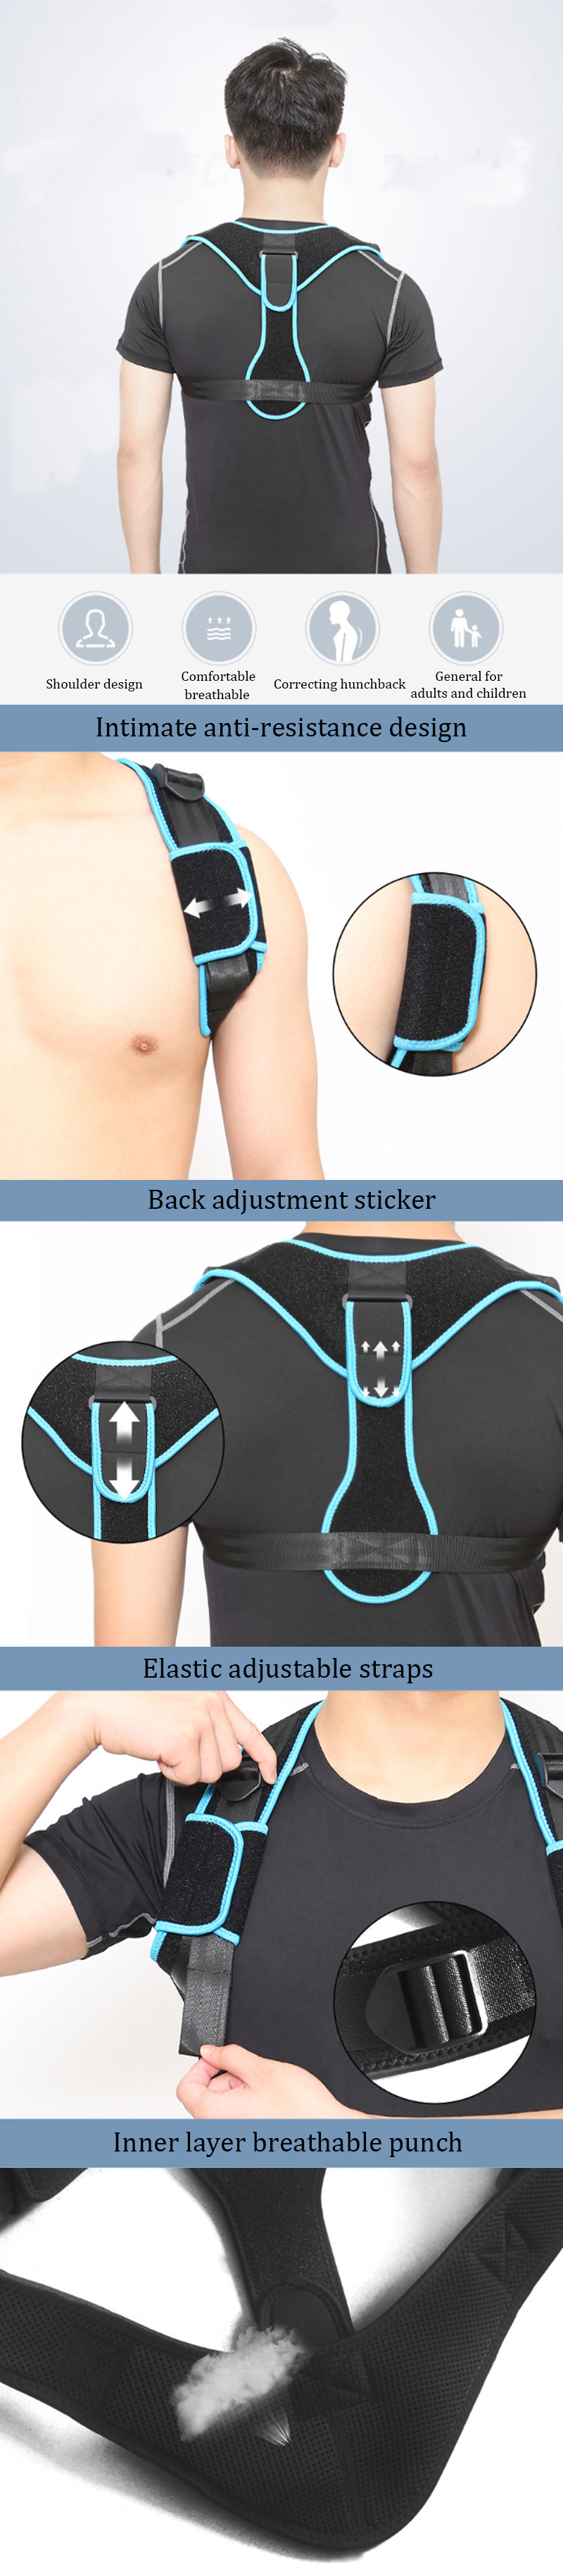 KALOAD-Humpback-Correction-Belt-Adjustable-Posture-Corrector-Pain-Relief-Back-Support-Sports-Protect-1450735-1